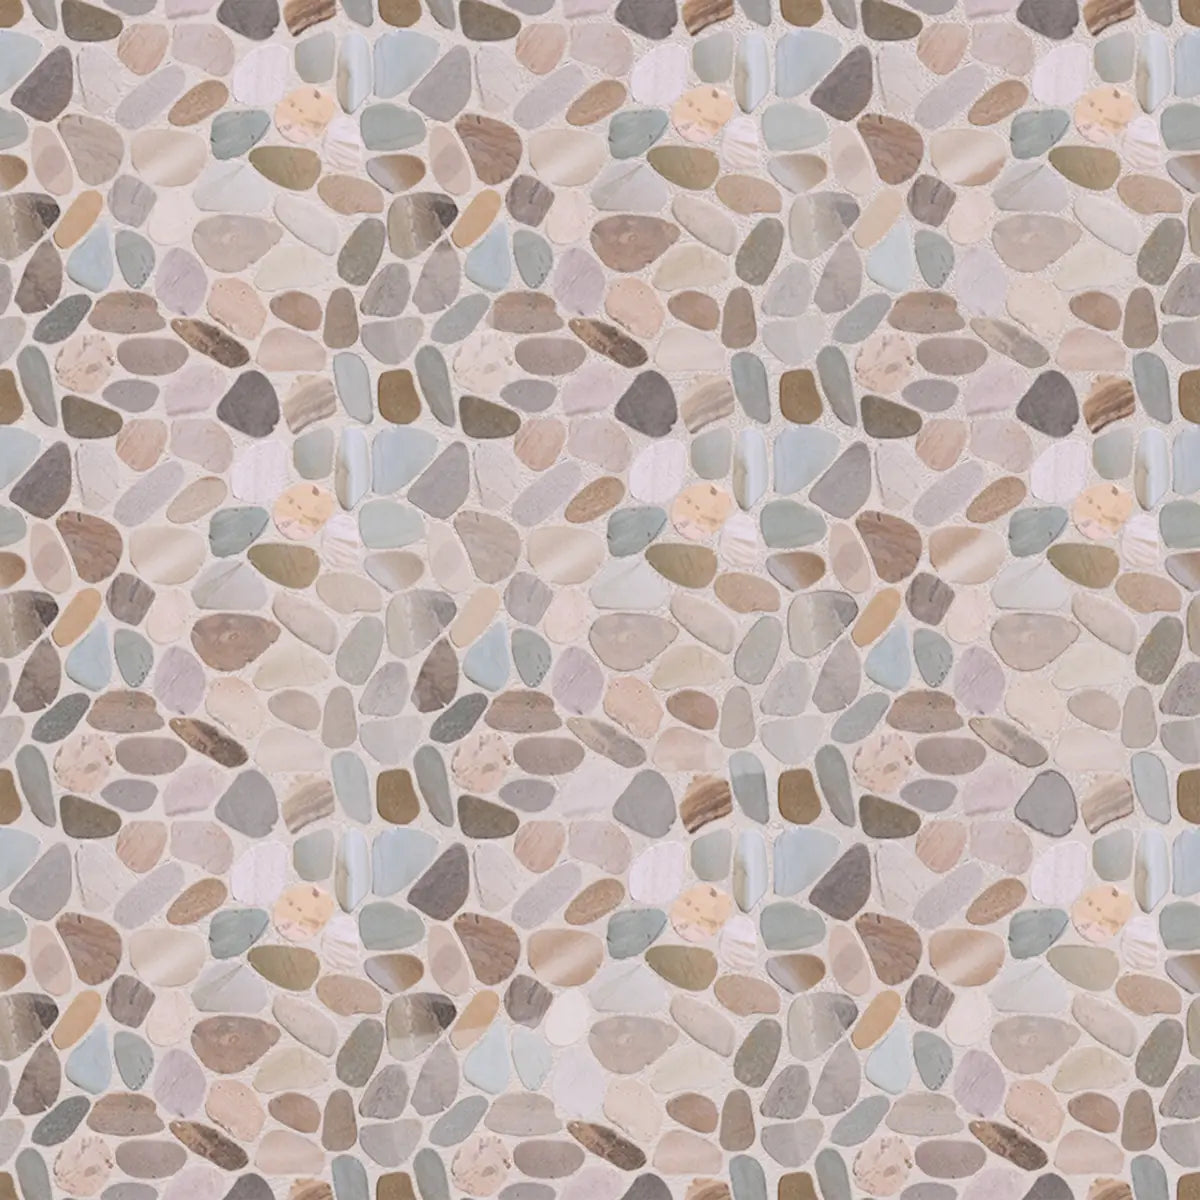 Colorful Mosaic Tiles, Olive Sliced Pebble Mosaic Wall & Floor Tile